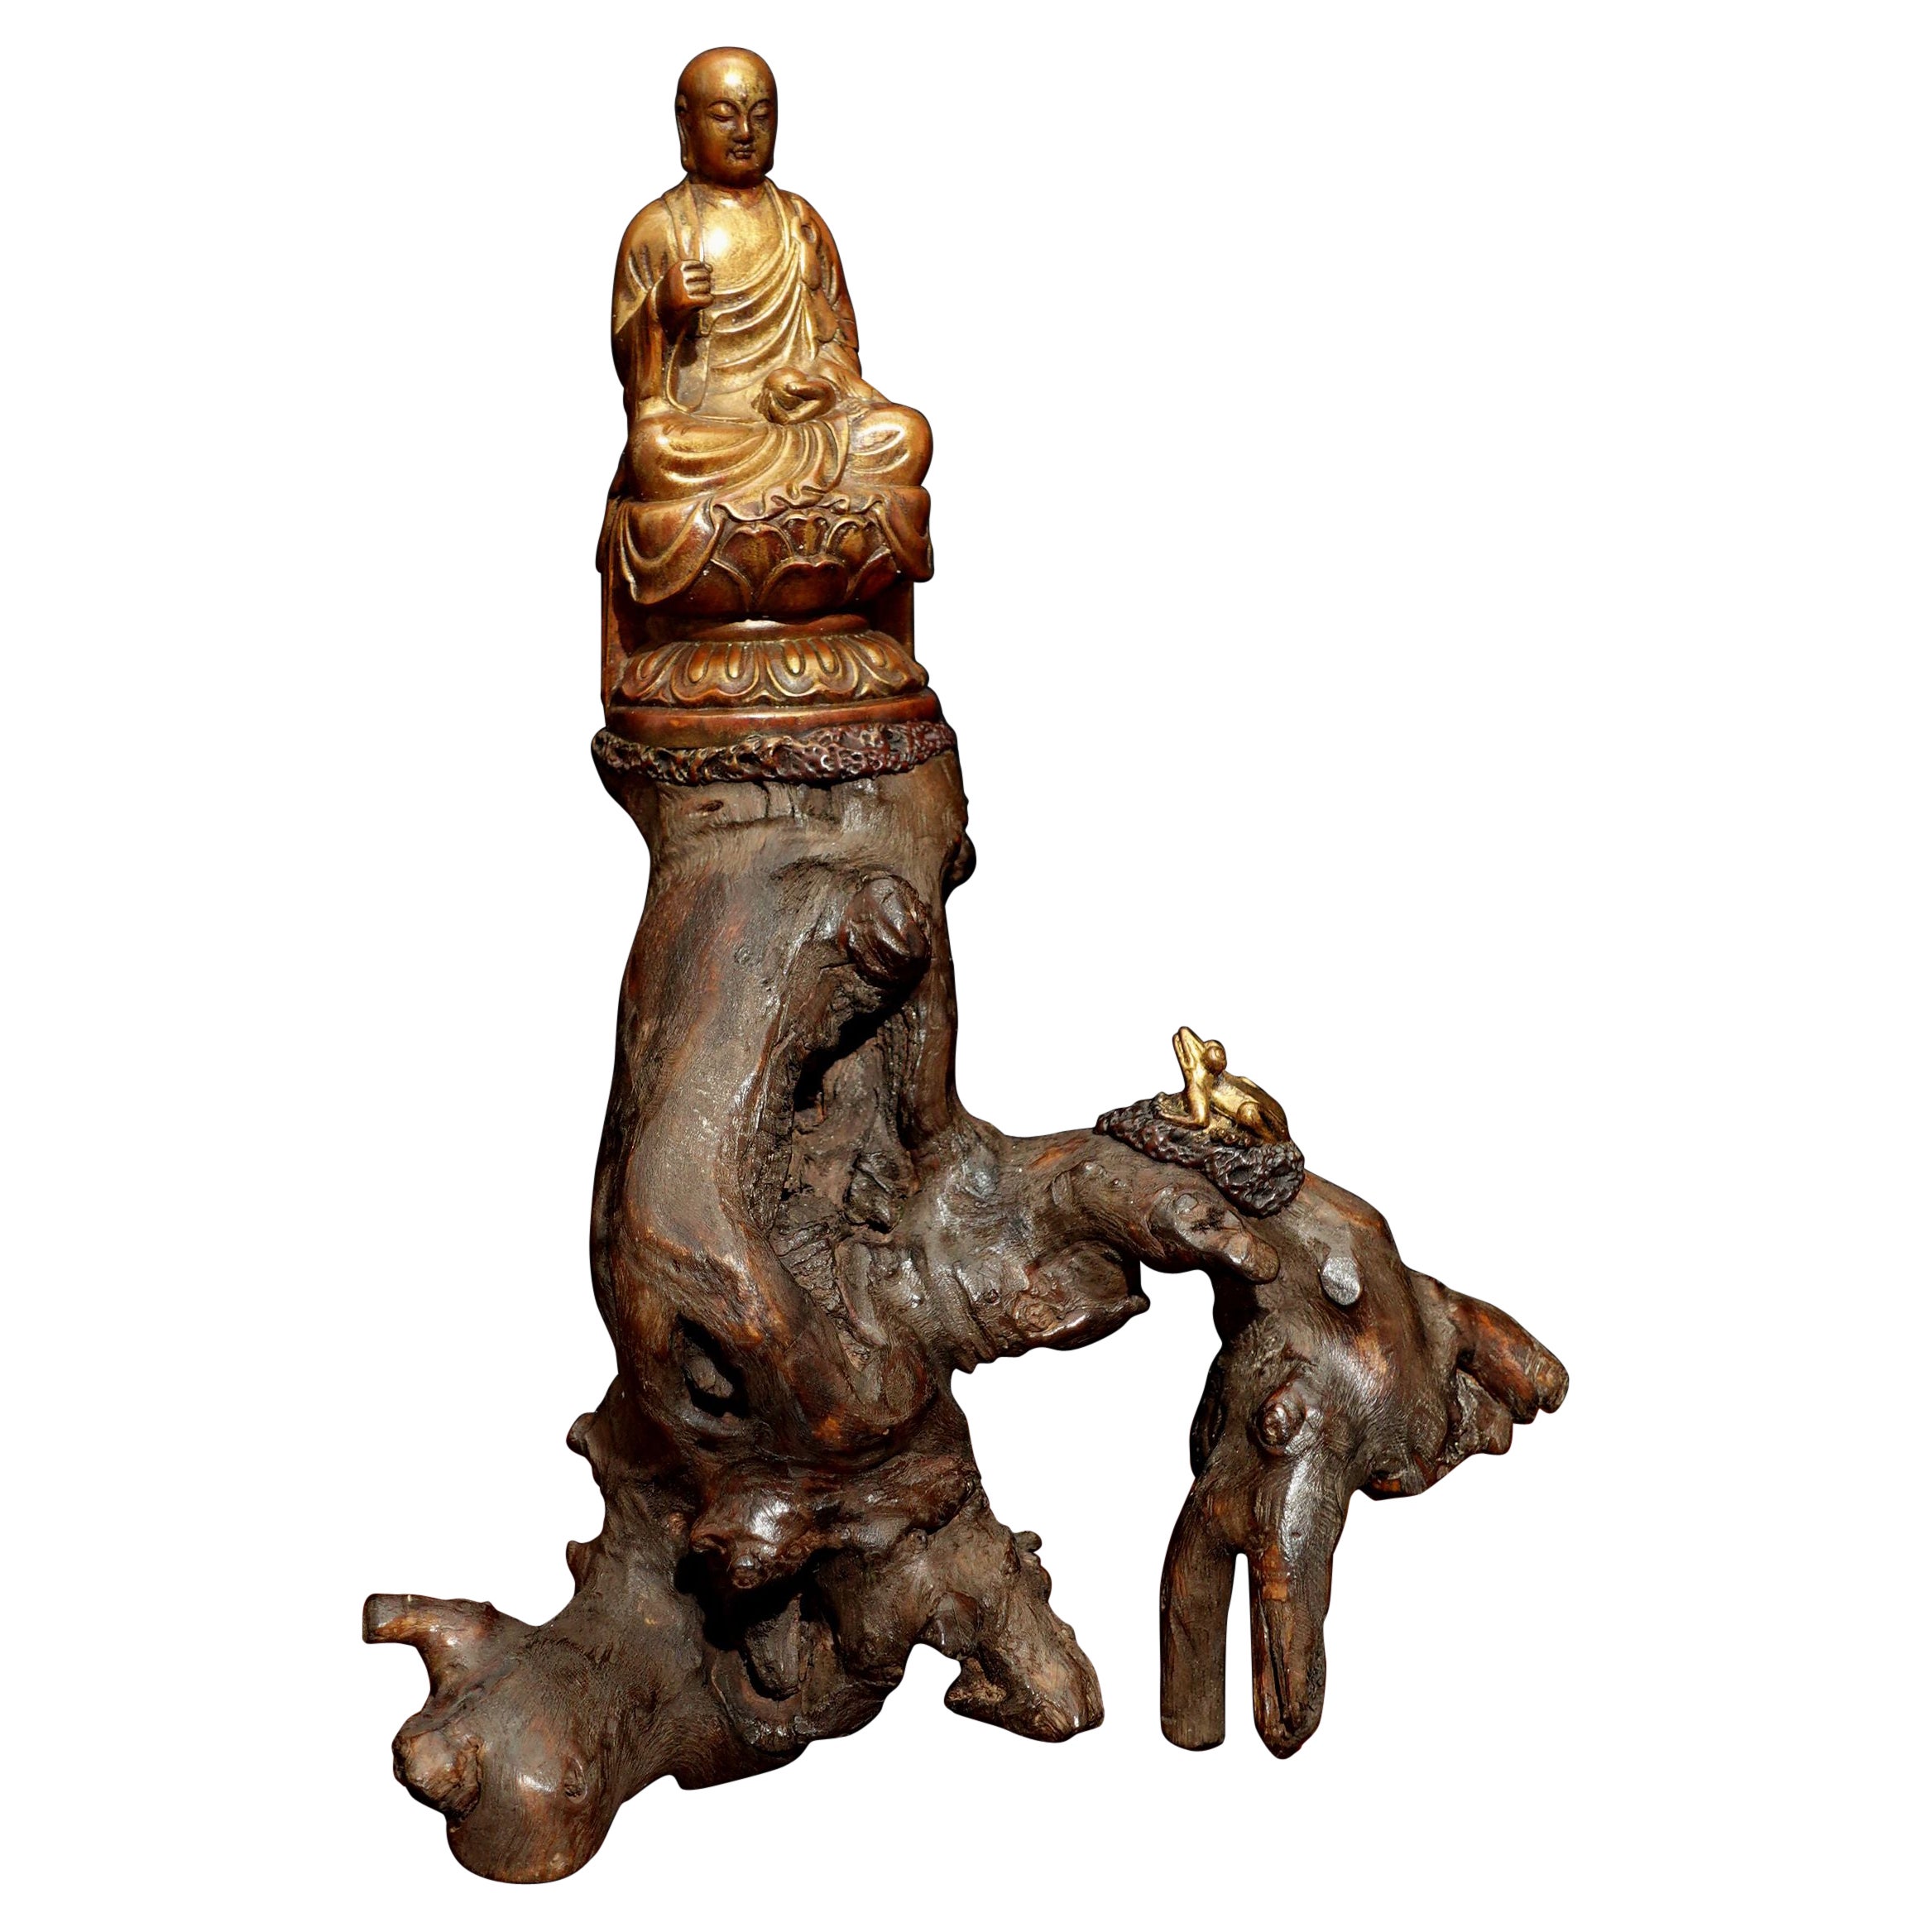 Holzwurzelschnitzerei von Jizu Bosatsu, dem Bodhisattva Jizo